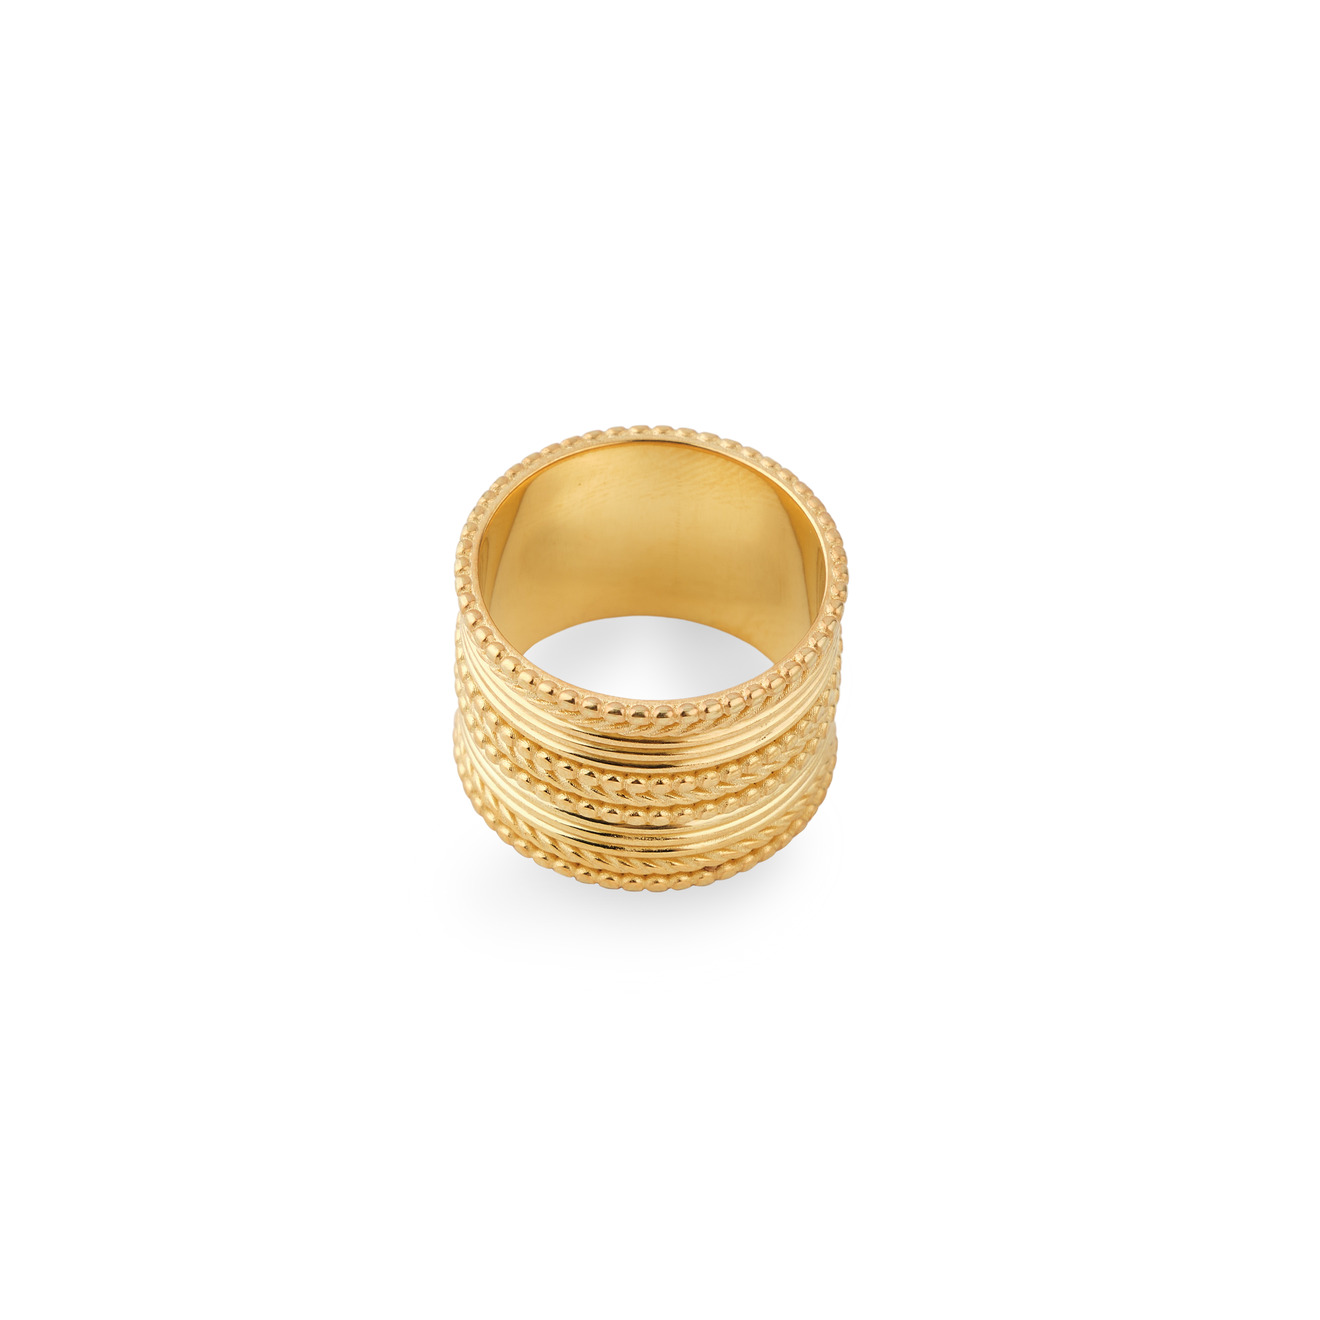 KRASHE jewellery Позолоченное кольцо «Клеопатра» krashe jewellery кольцо вороны москвички с цитринами и хризолитами